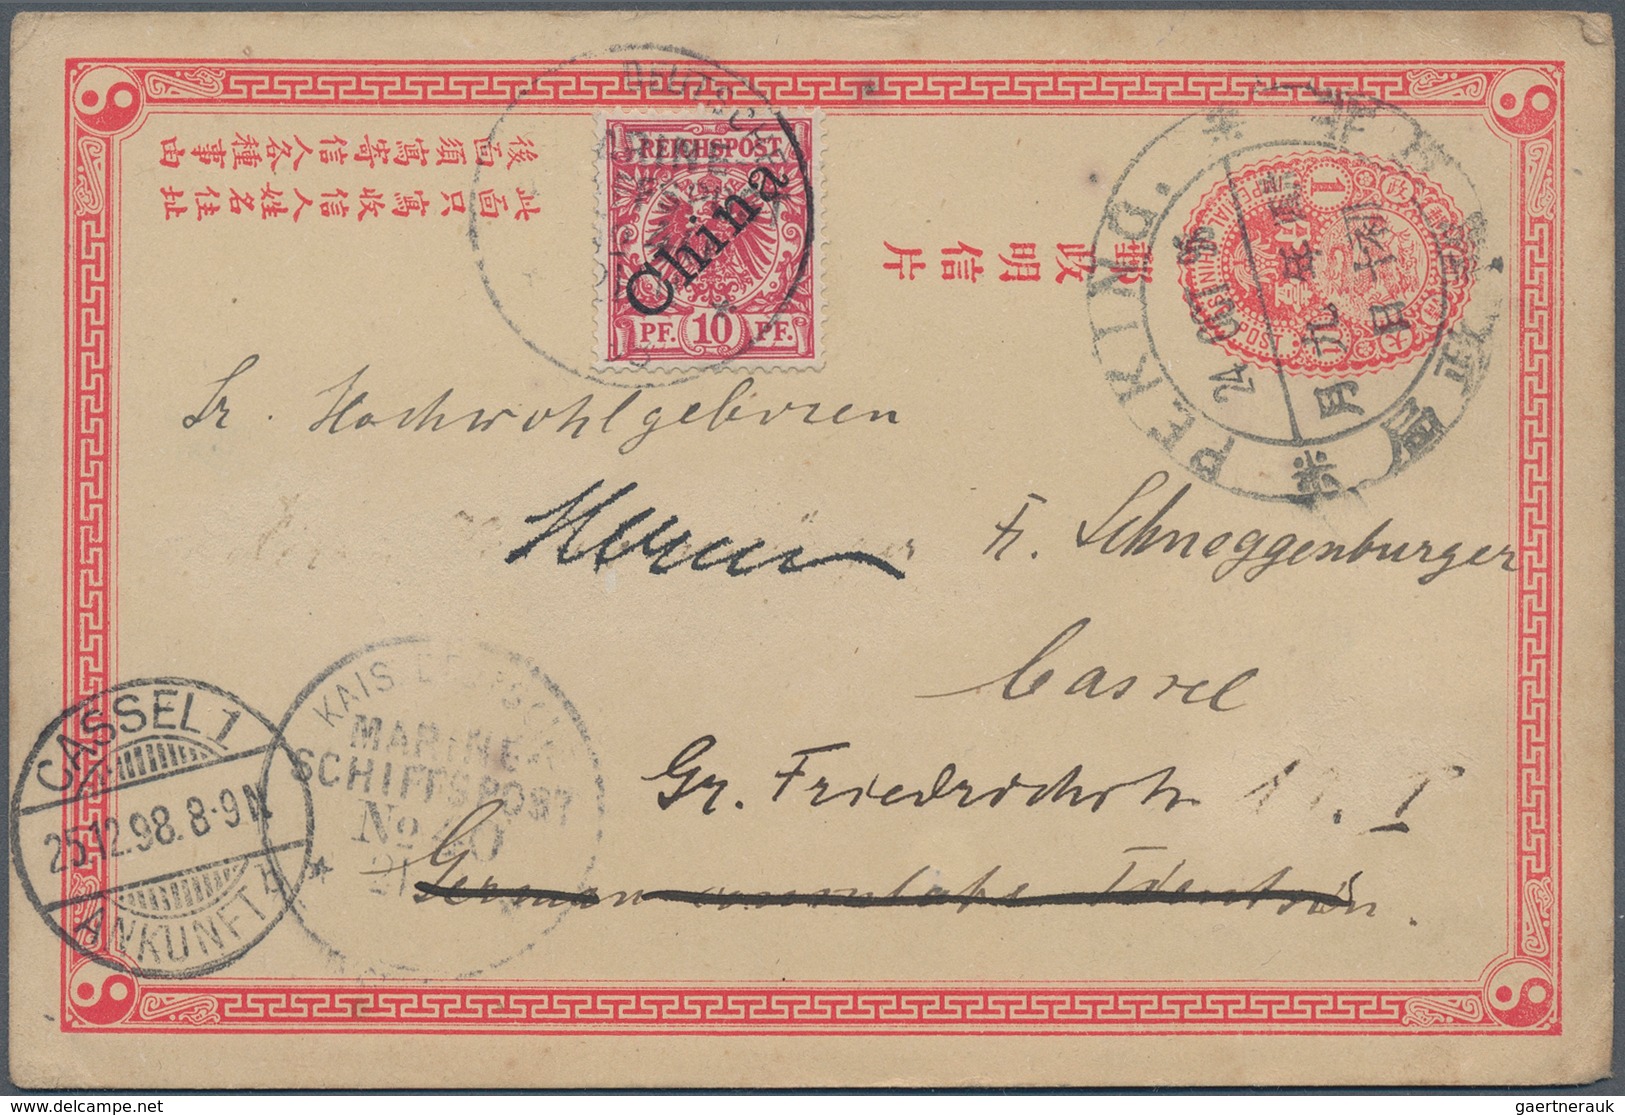 08192 China - Ganzsachen: 1897, Card ICP 1 C. Canc. Large Dollar "PEKING 24 OCT 98" With German Offices 10 - Ansichtskarten